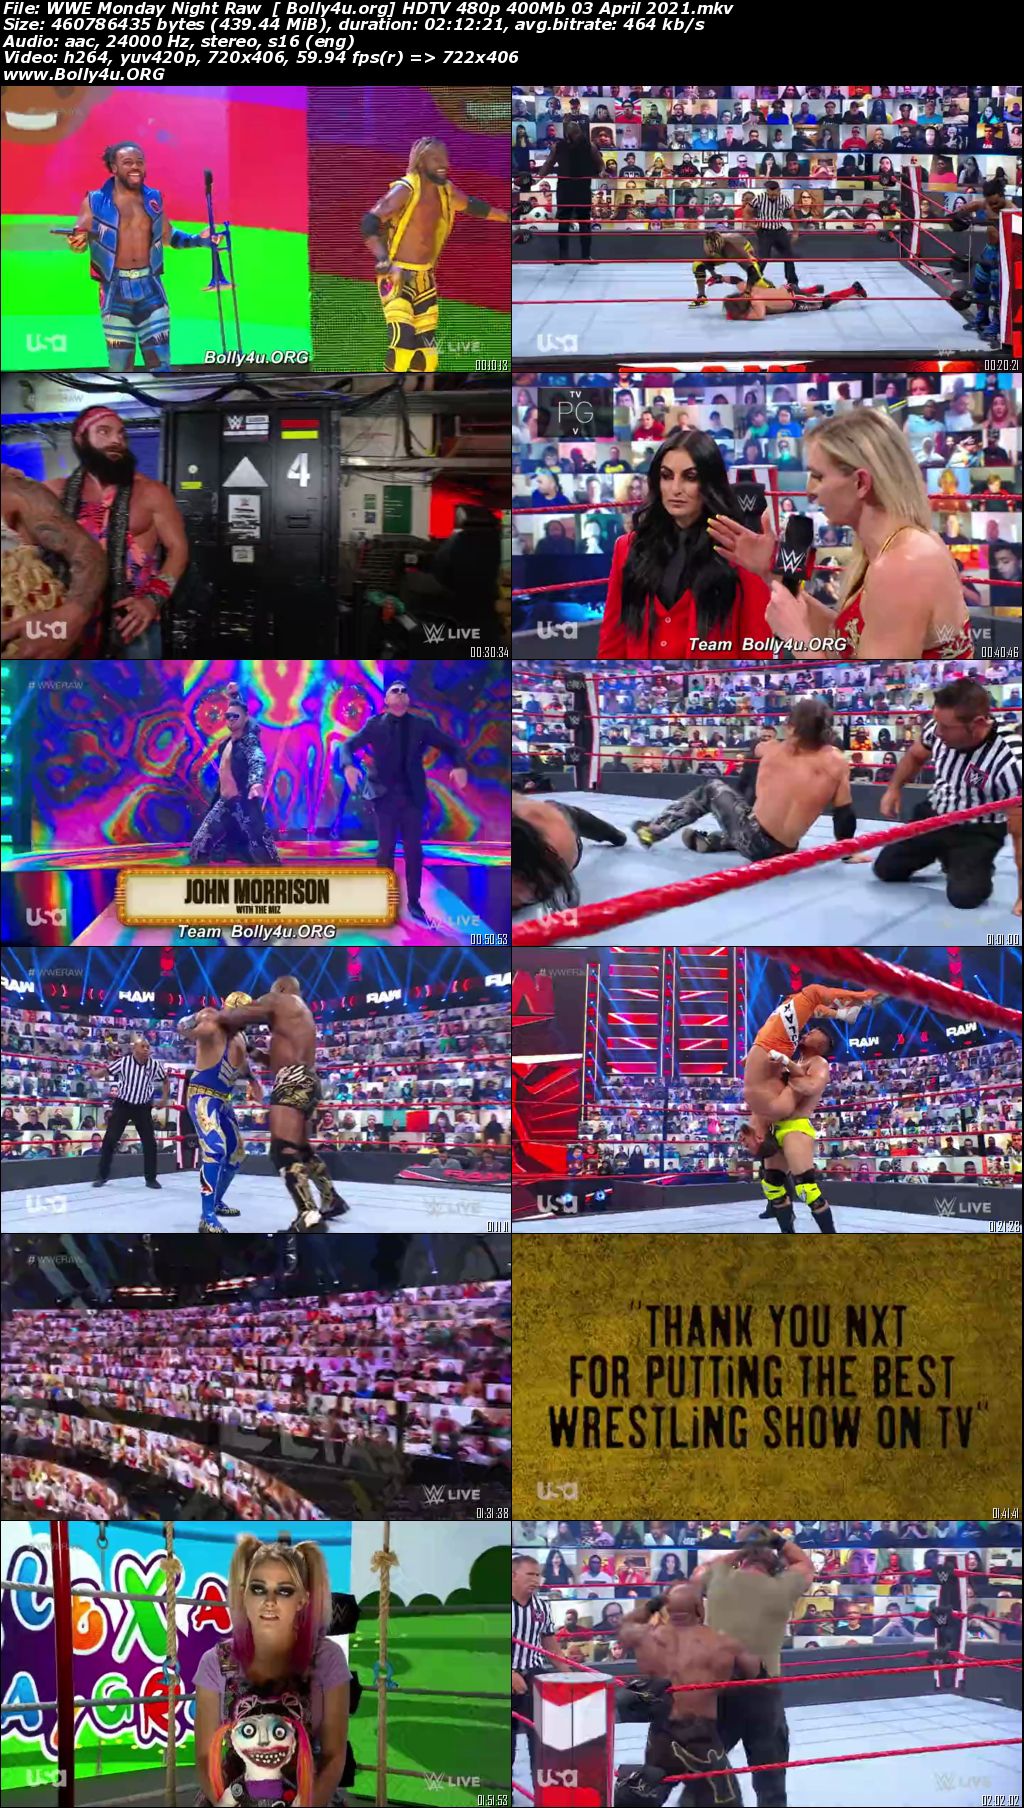 WWE Monday Night Raw HDTV 480p 400Mb 03 April 2021 Download